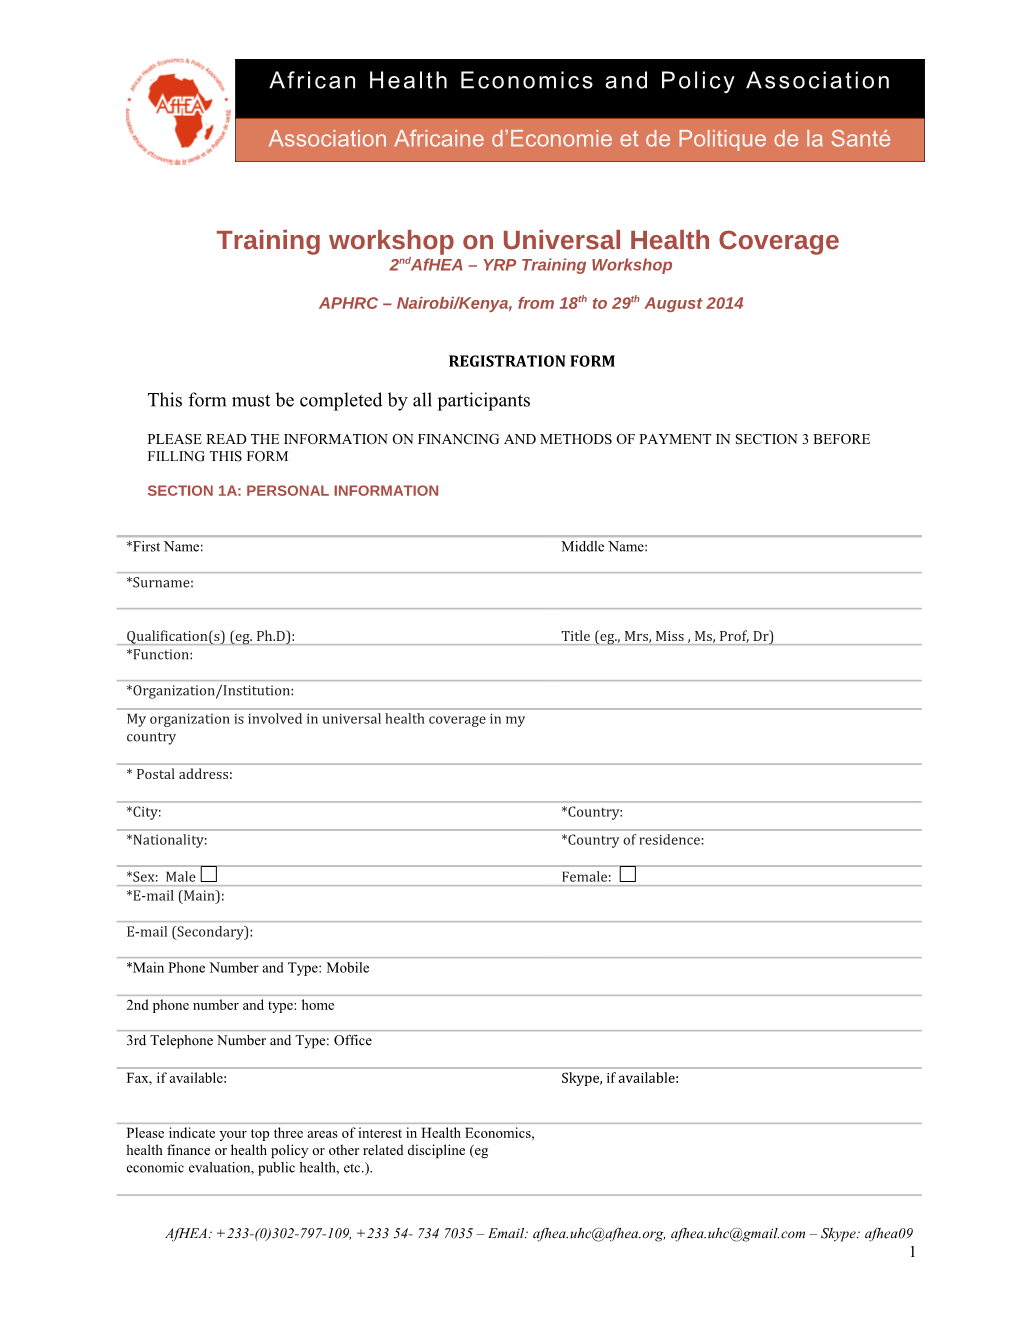 Training Workshop on Universal Health Coverage